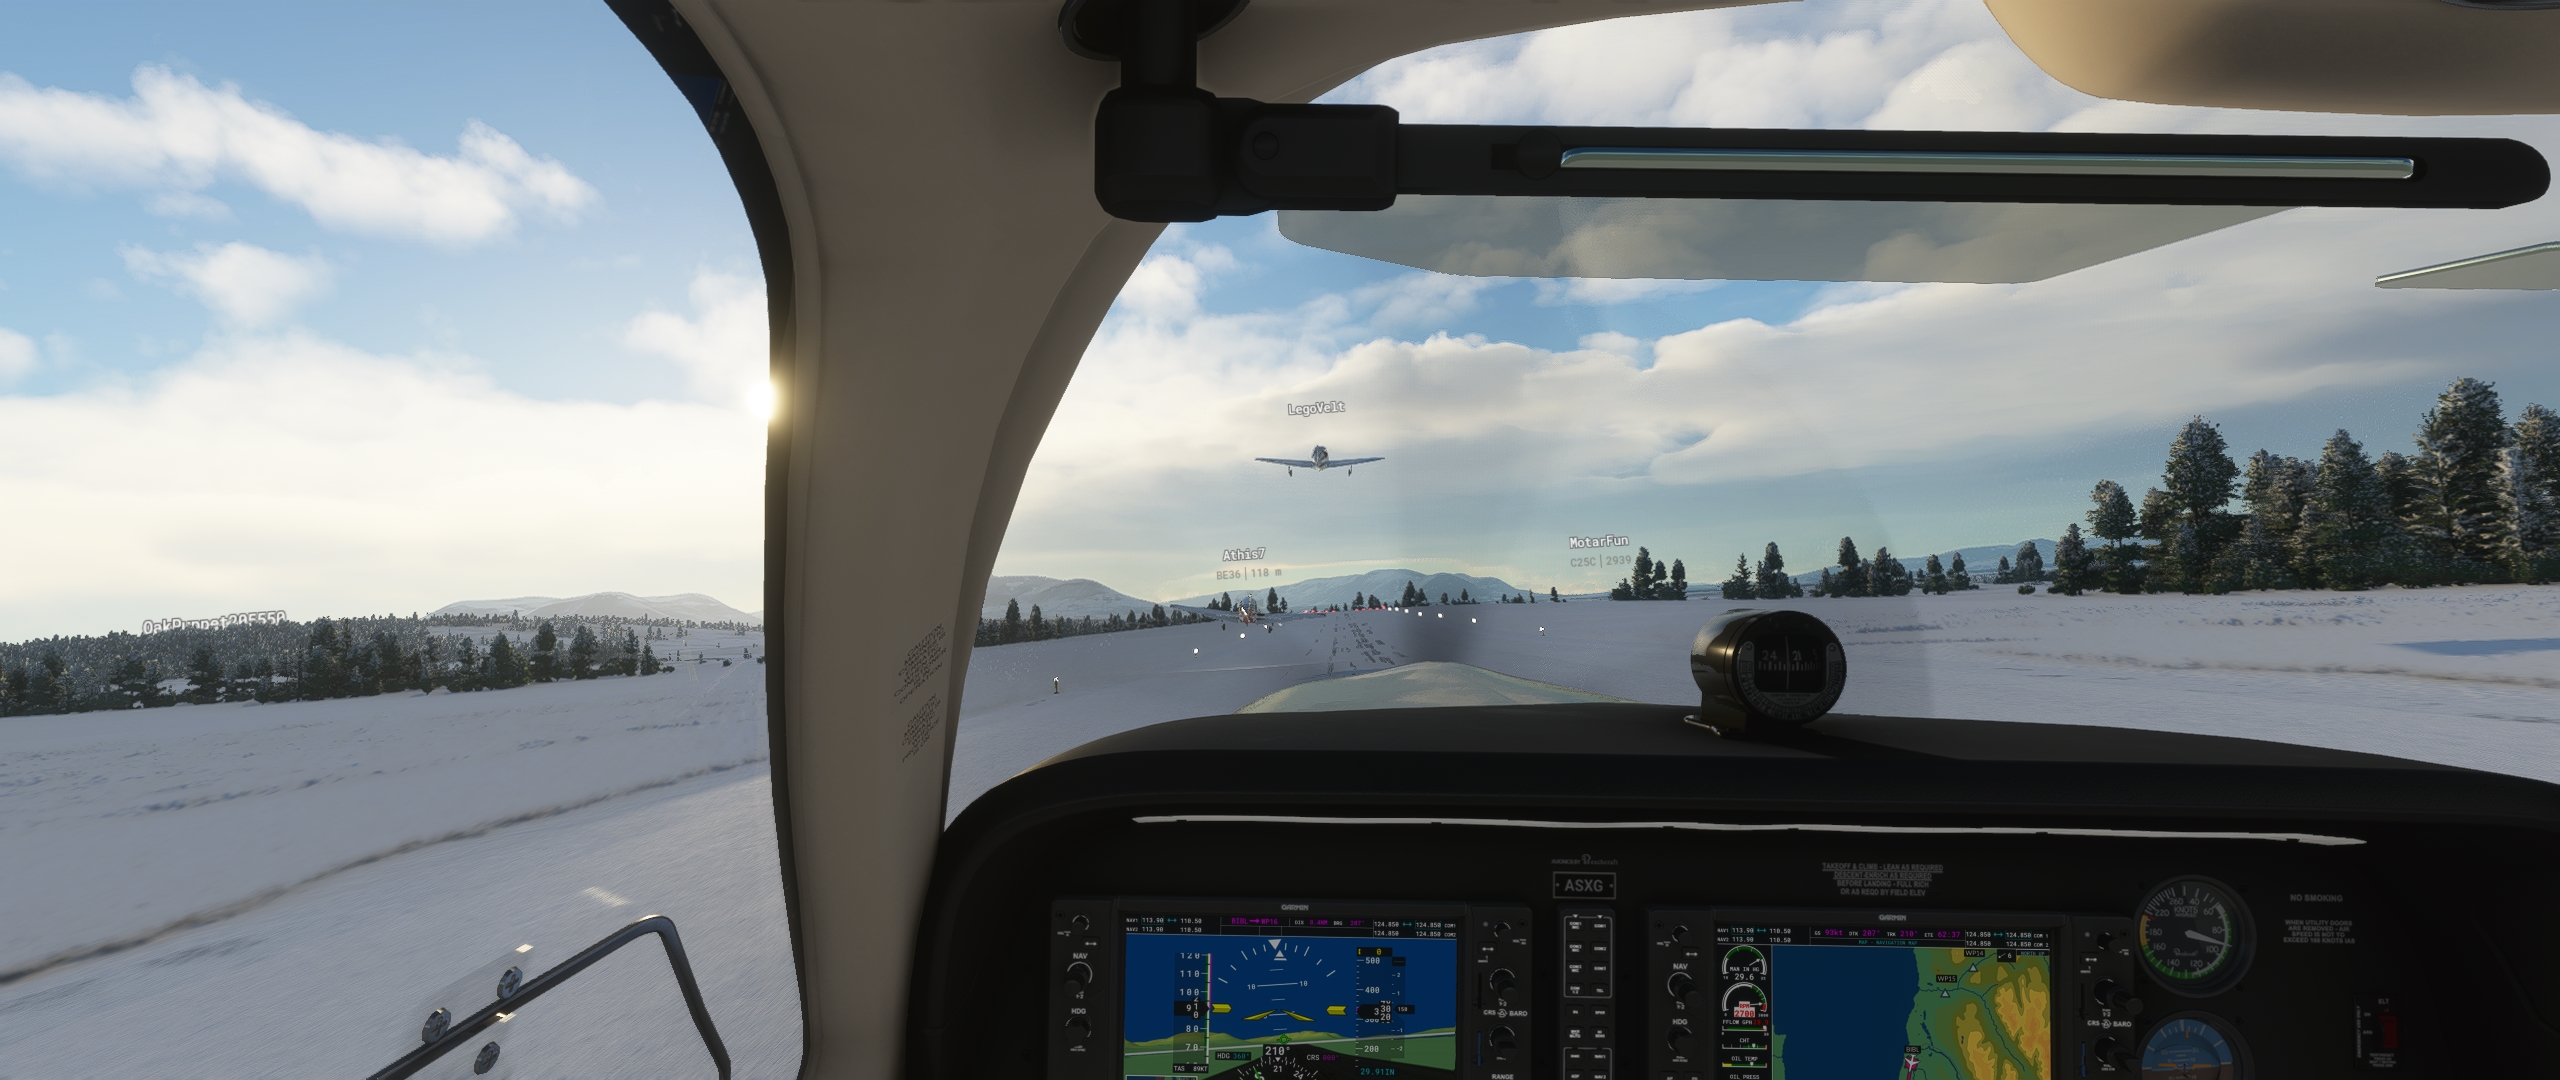 2021-02-13 17_50_19-Microsoft Flight Simulator - 1.12.13.0.jpg